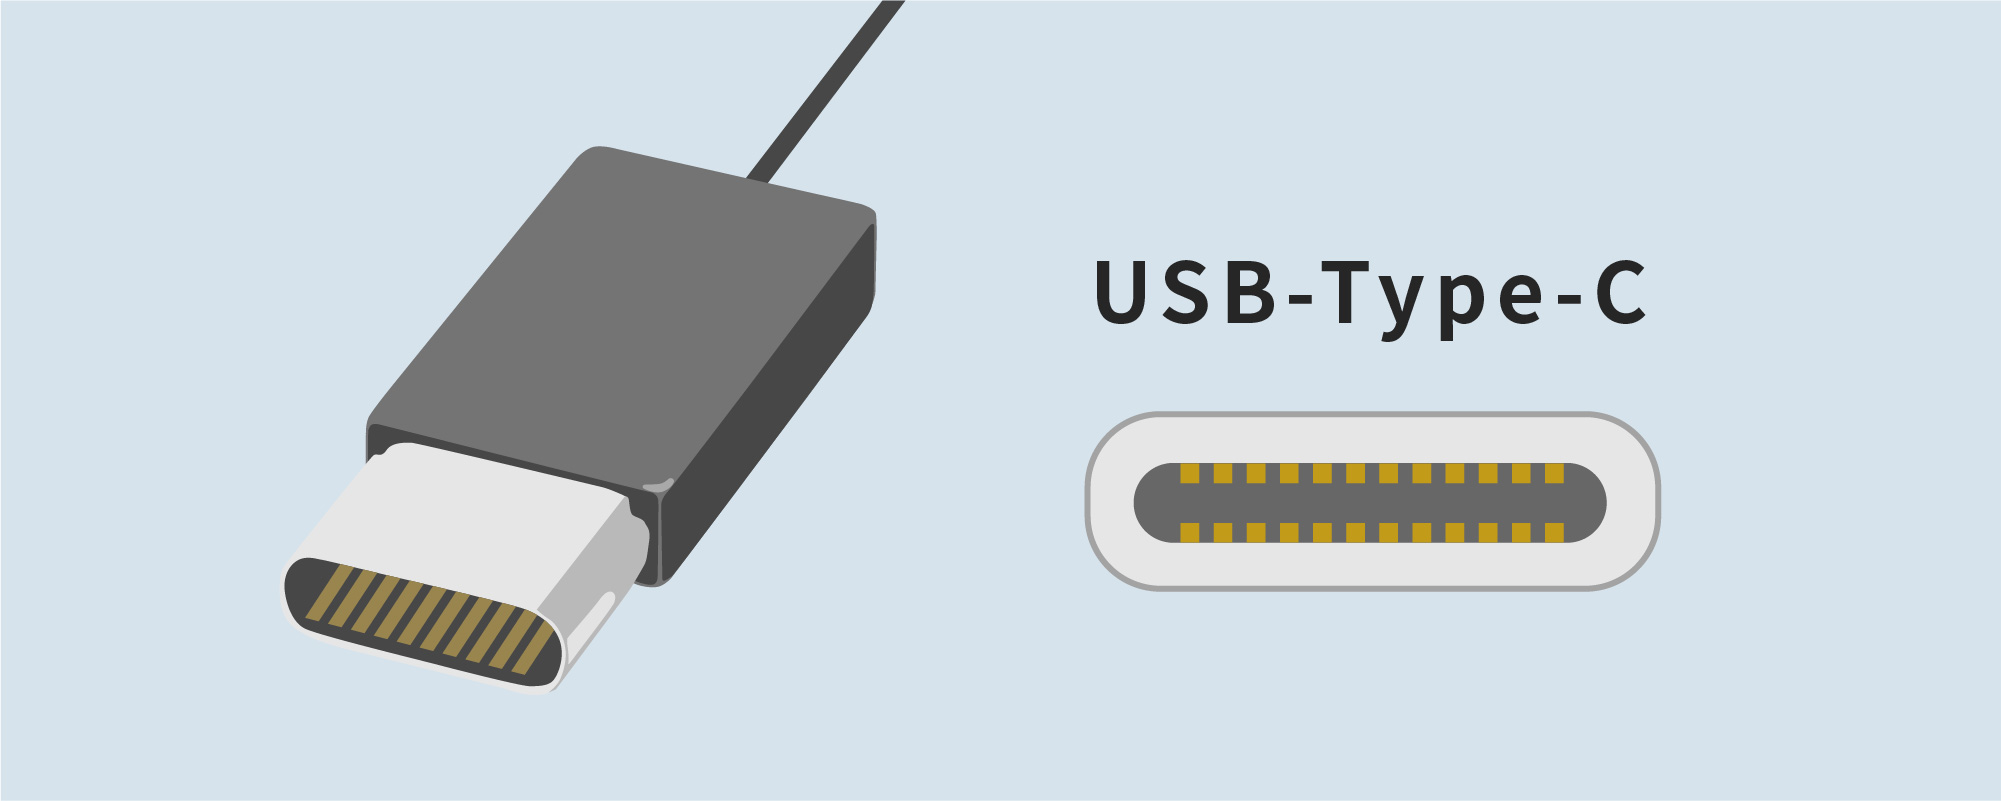 USB Type-Cコネクターとポート